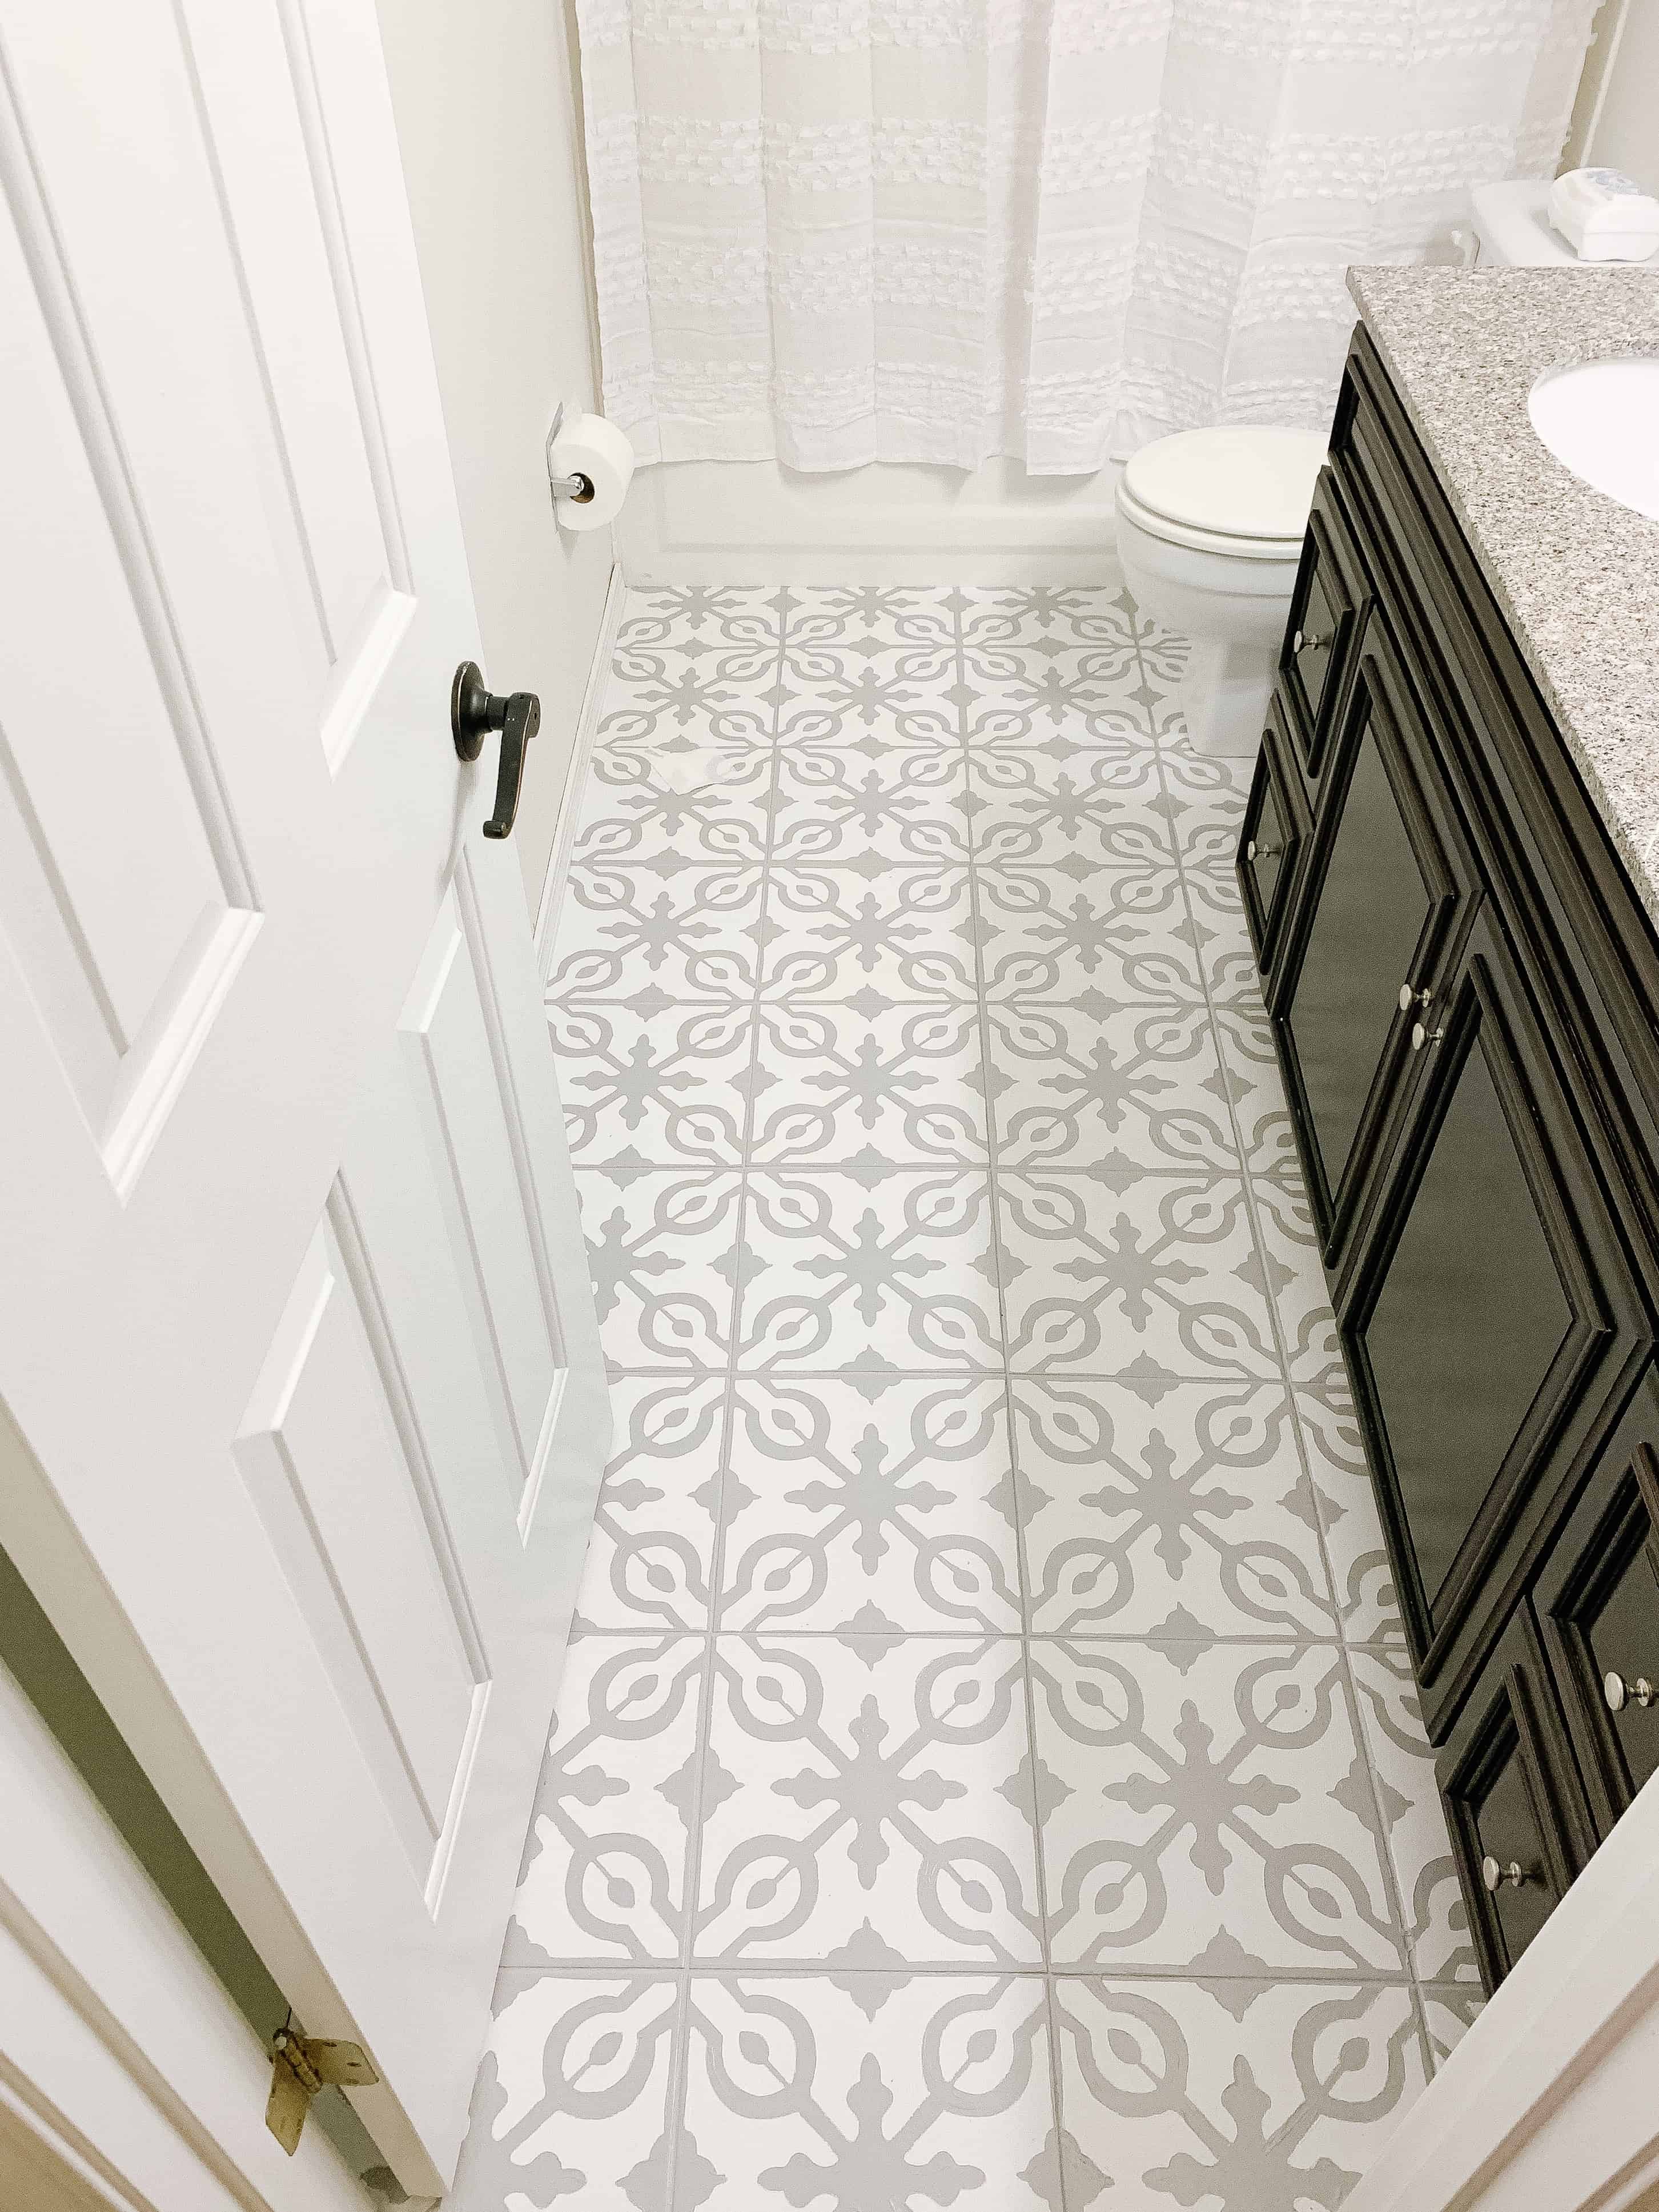 How To Paint Tile Floors, Waterproof Paint For Bathroom Floor Tiles